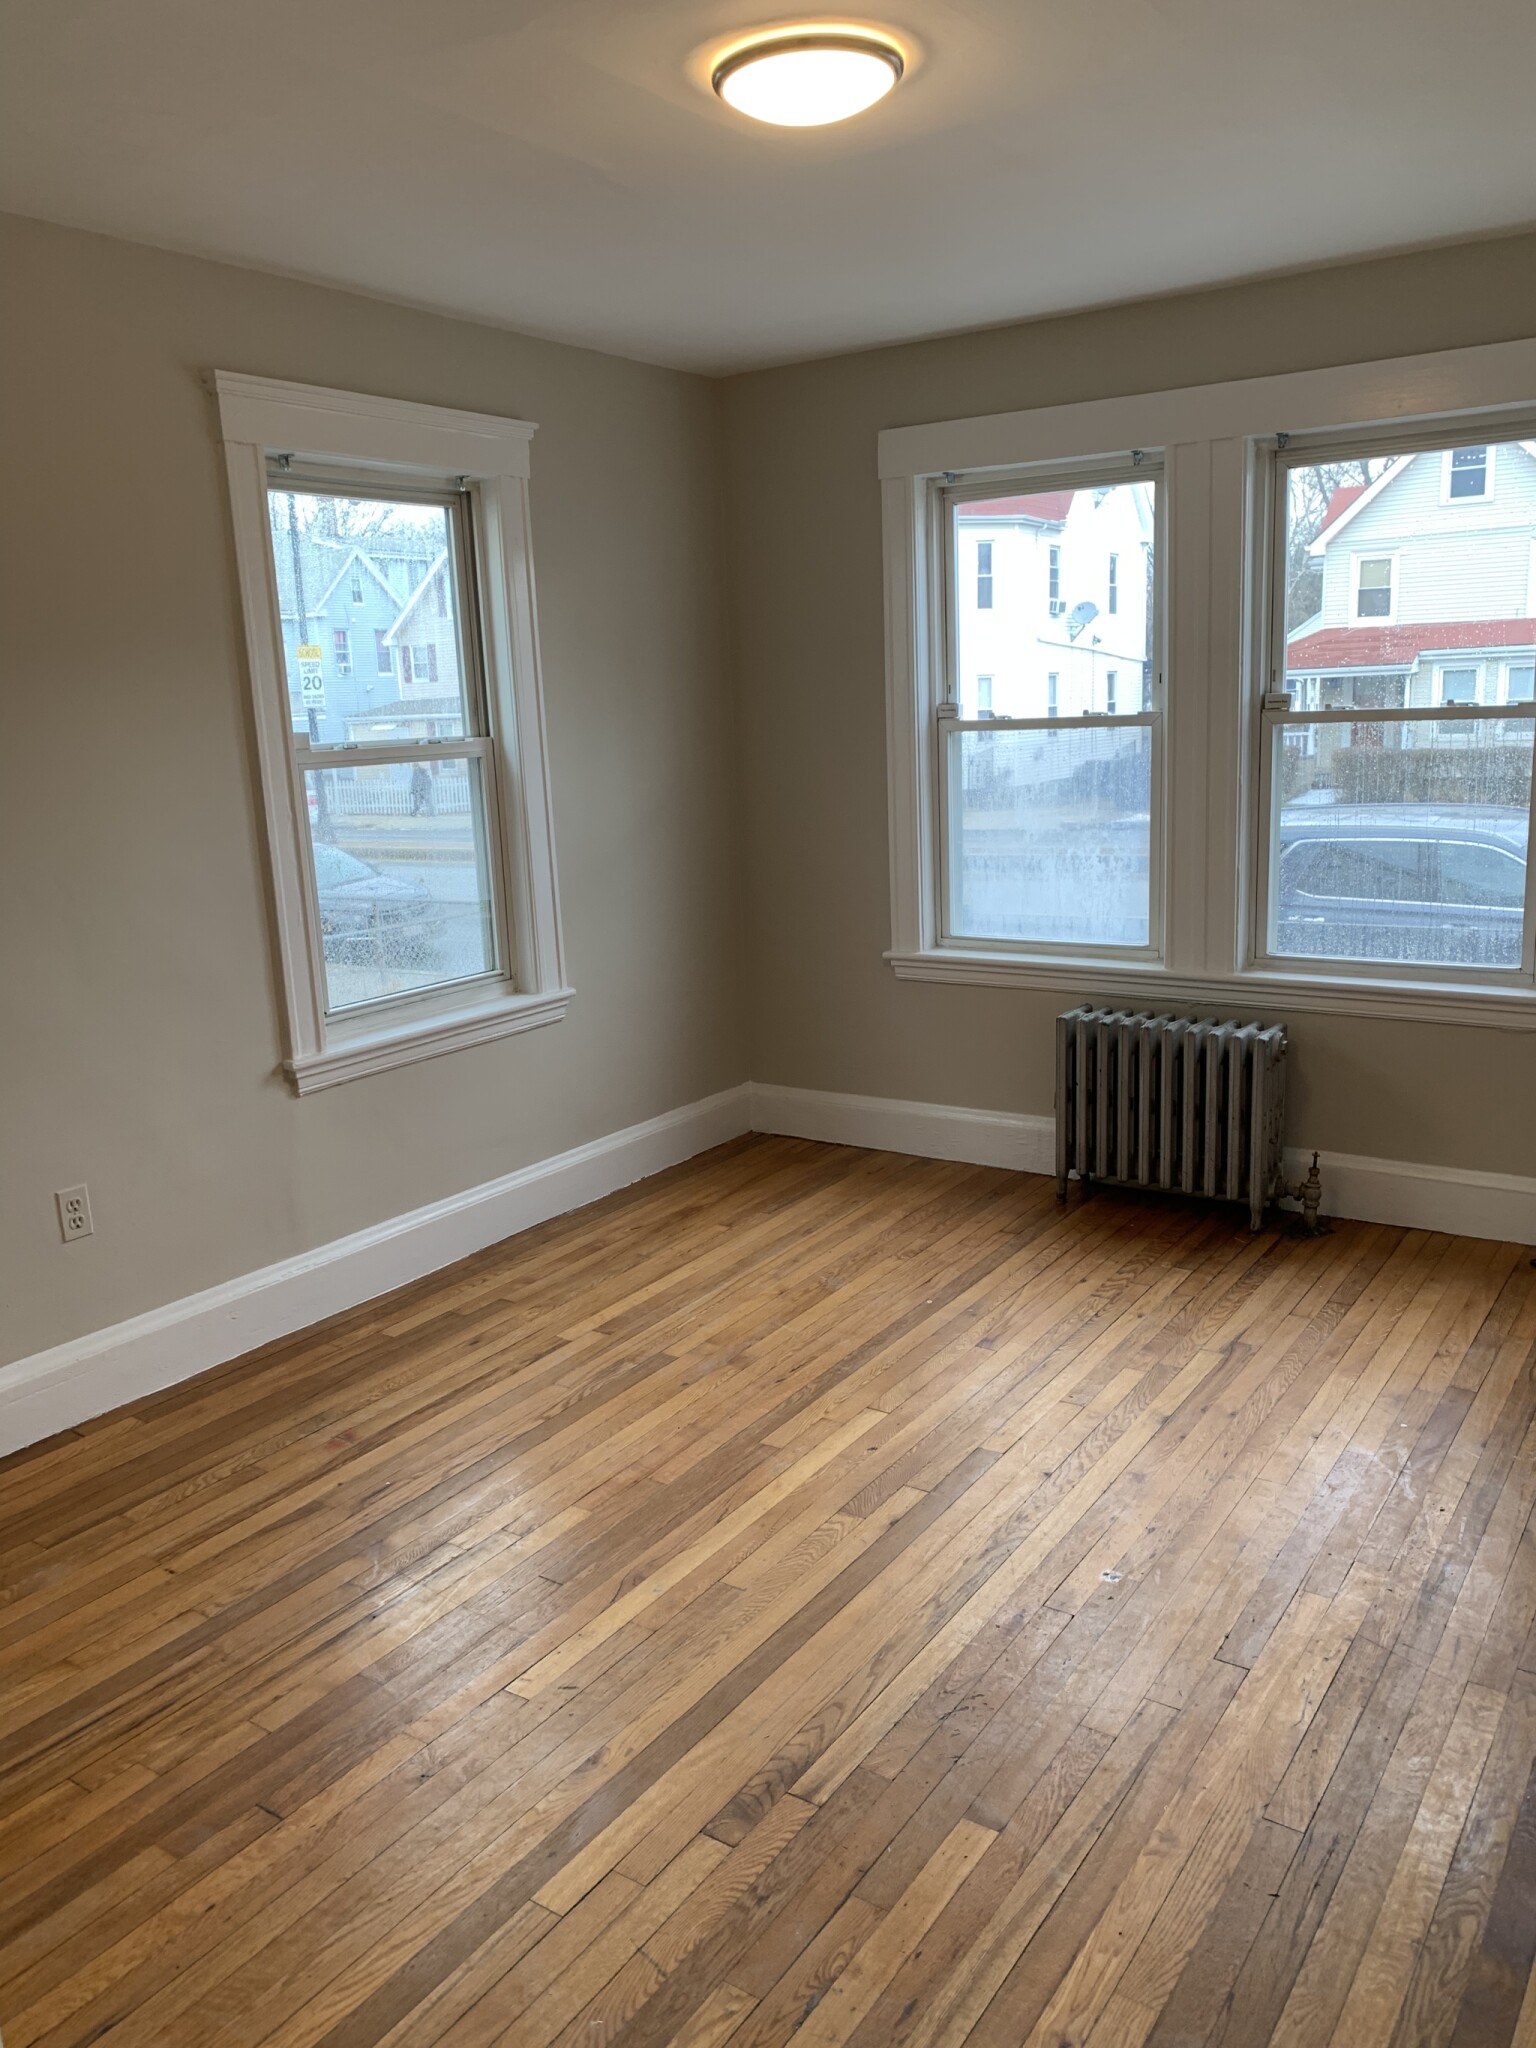 Photos of apartment on Hyde Park Ave.,Boston MA 02131